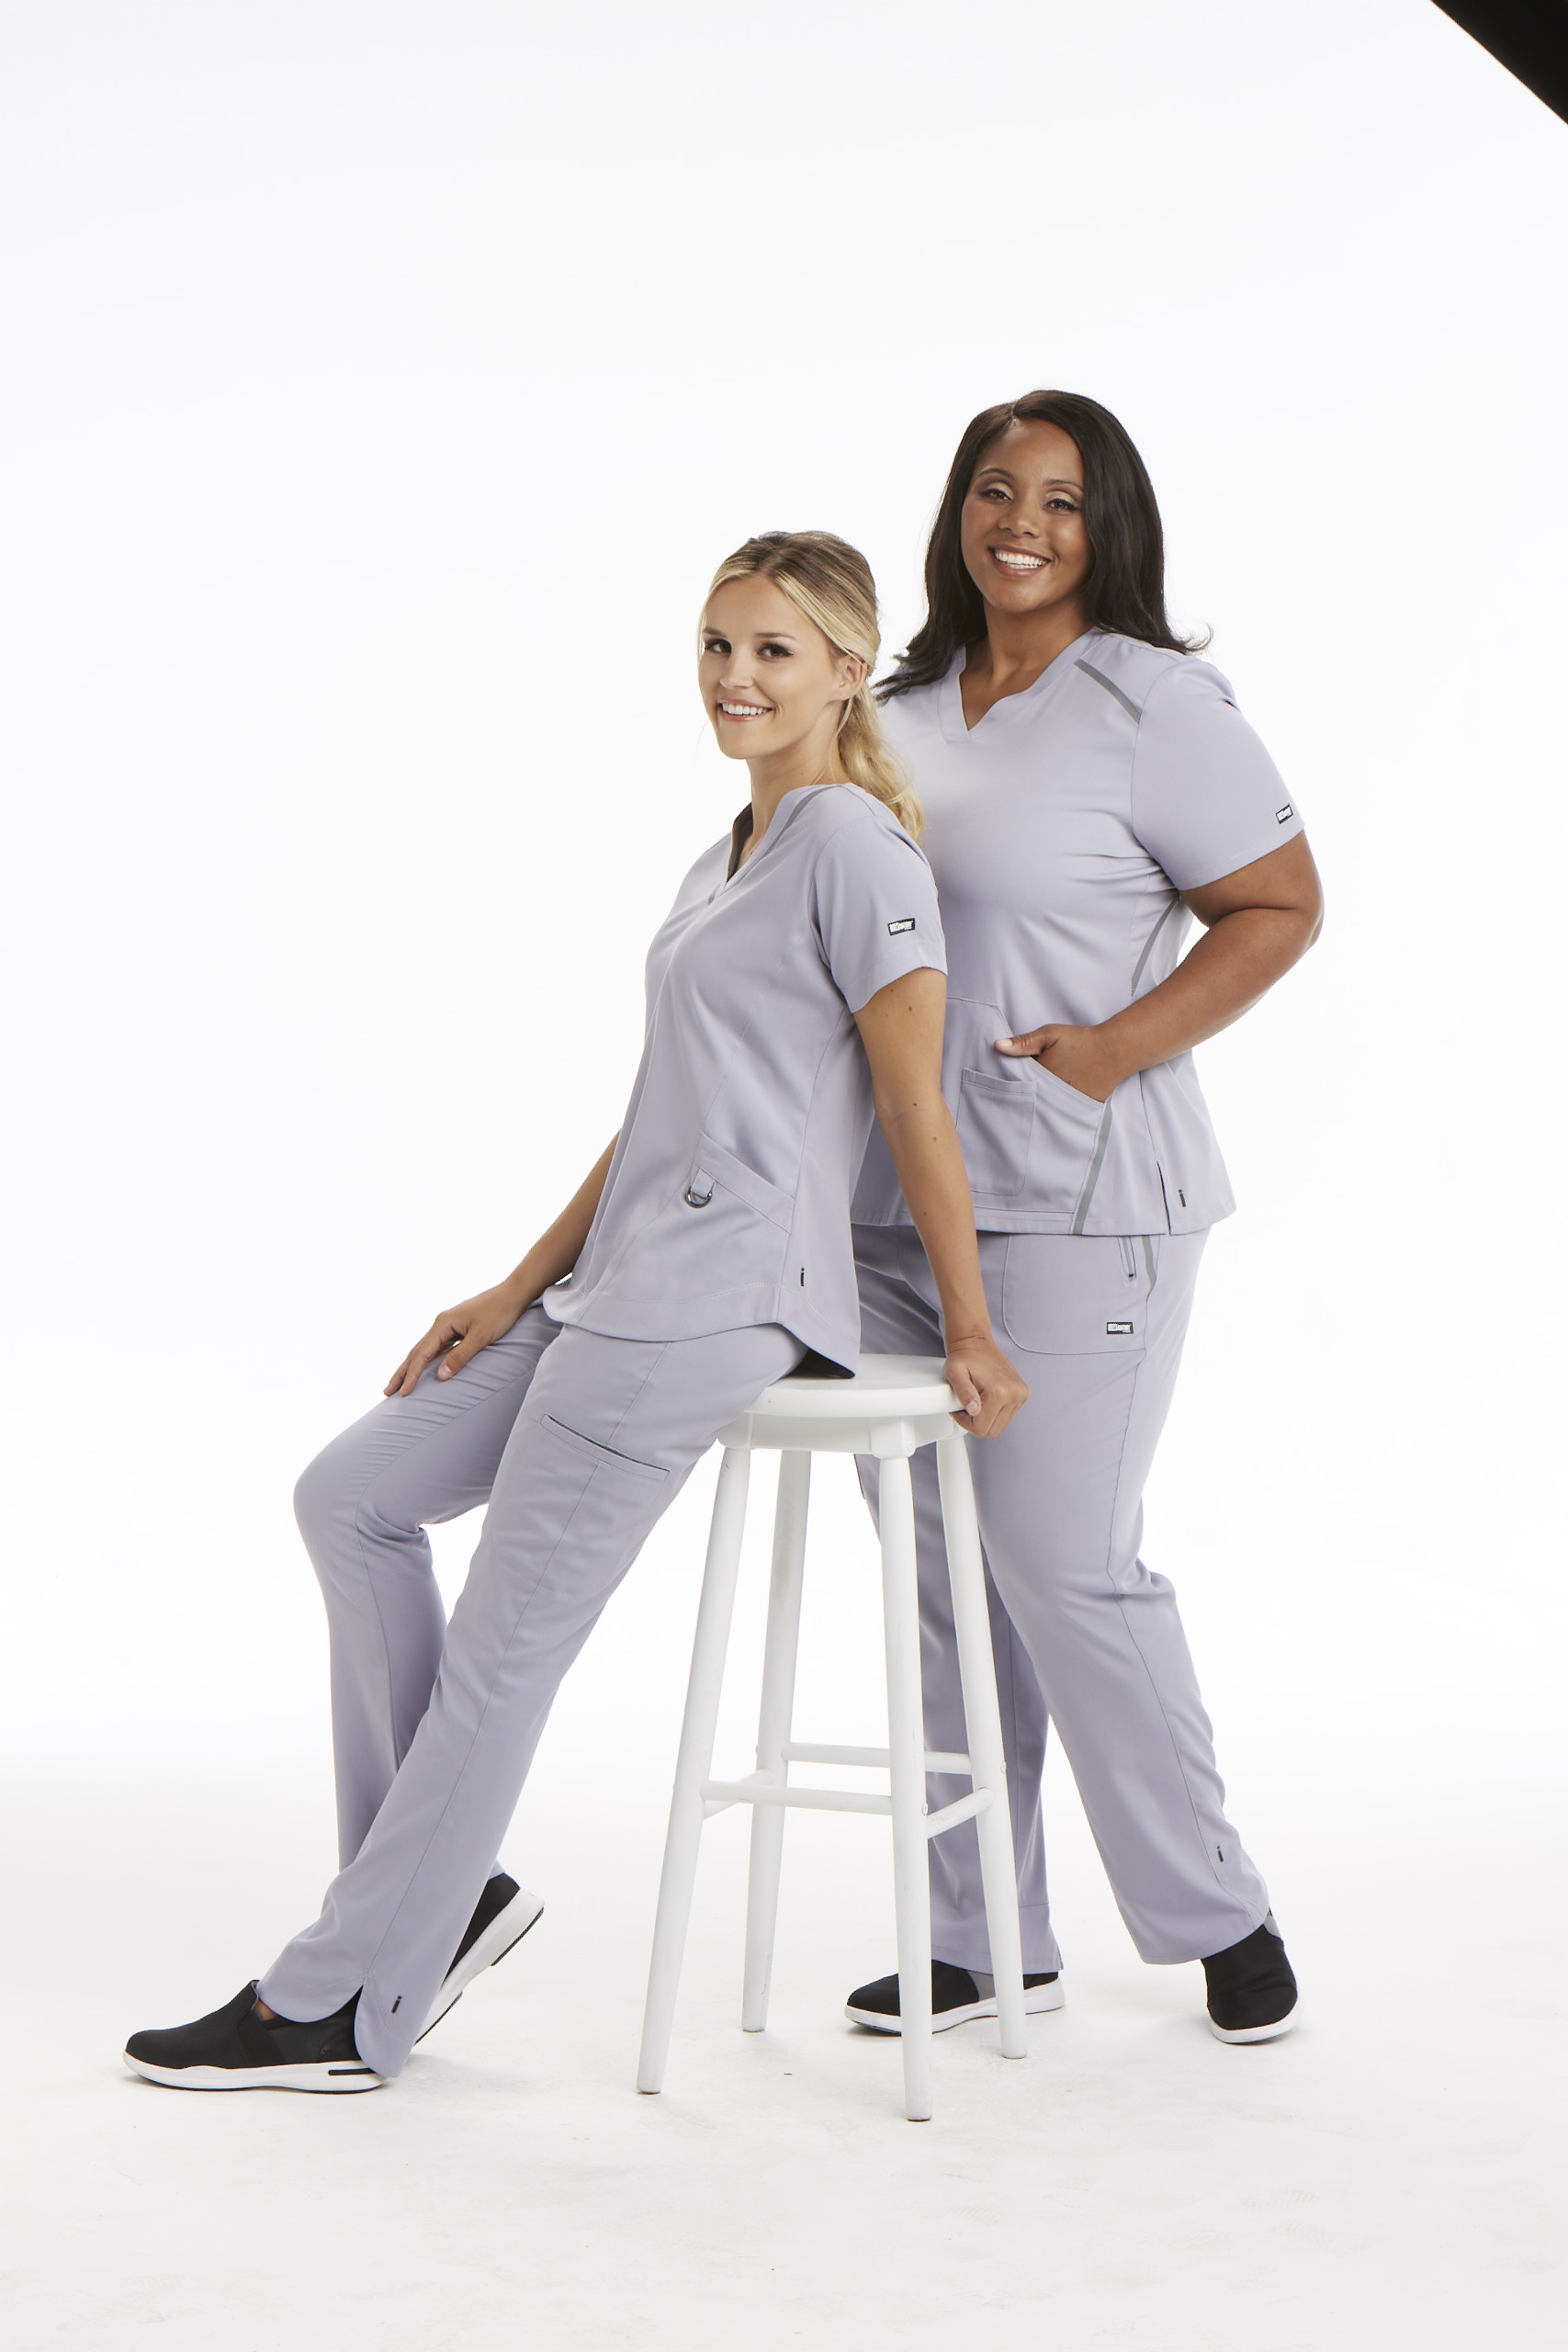 Grey's Anatomy Scrubs - Love Scrubs Medical Uniforms